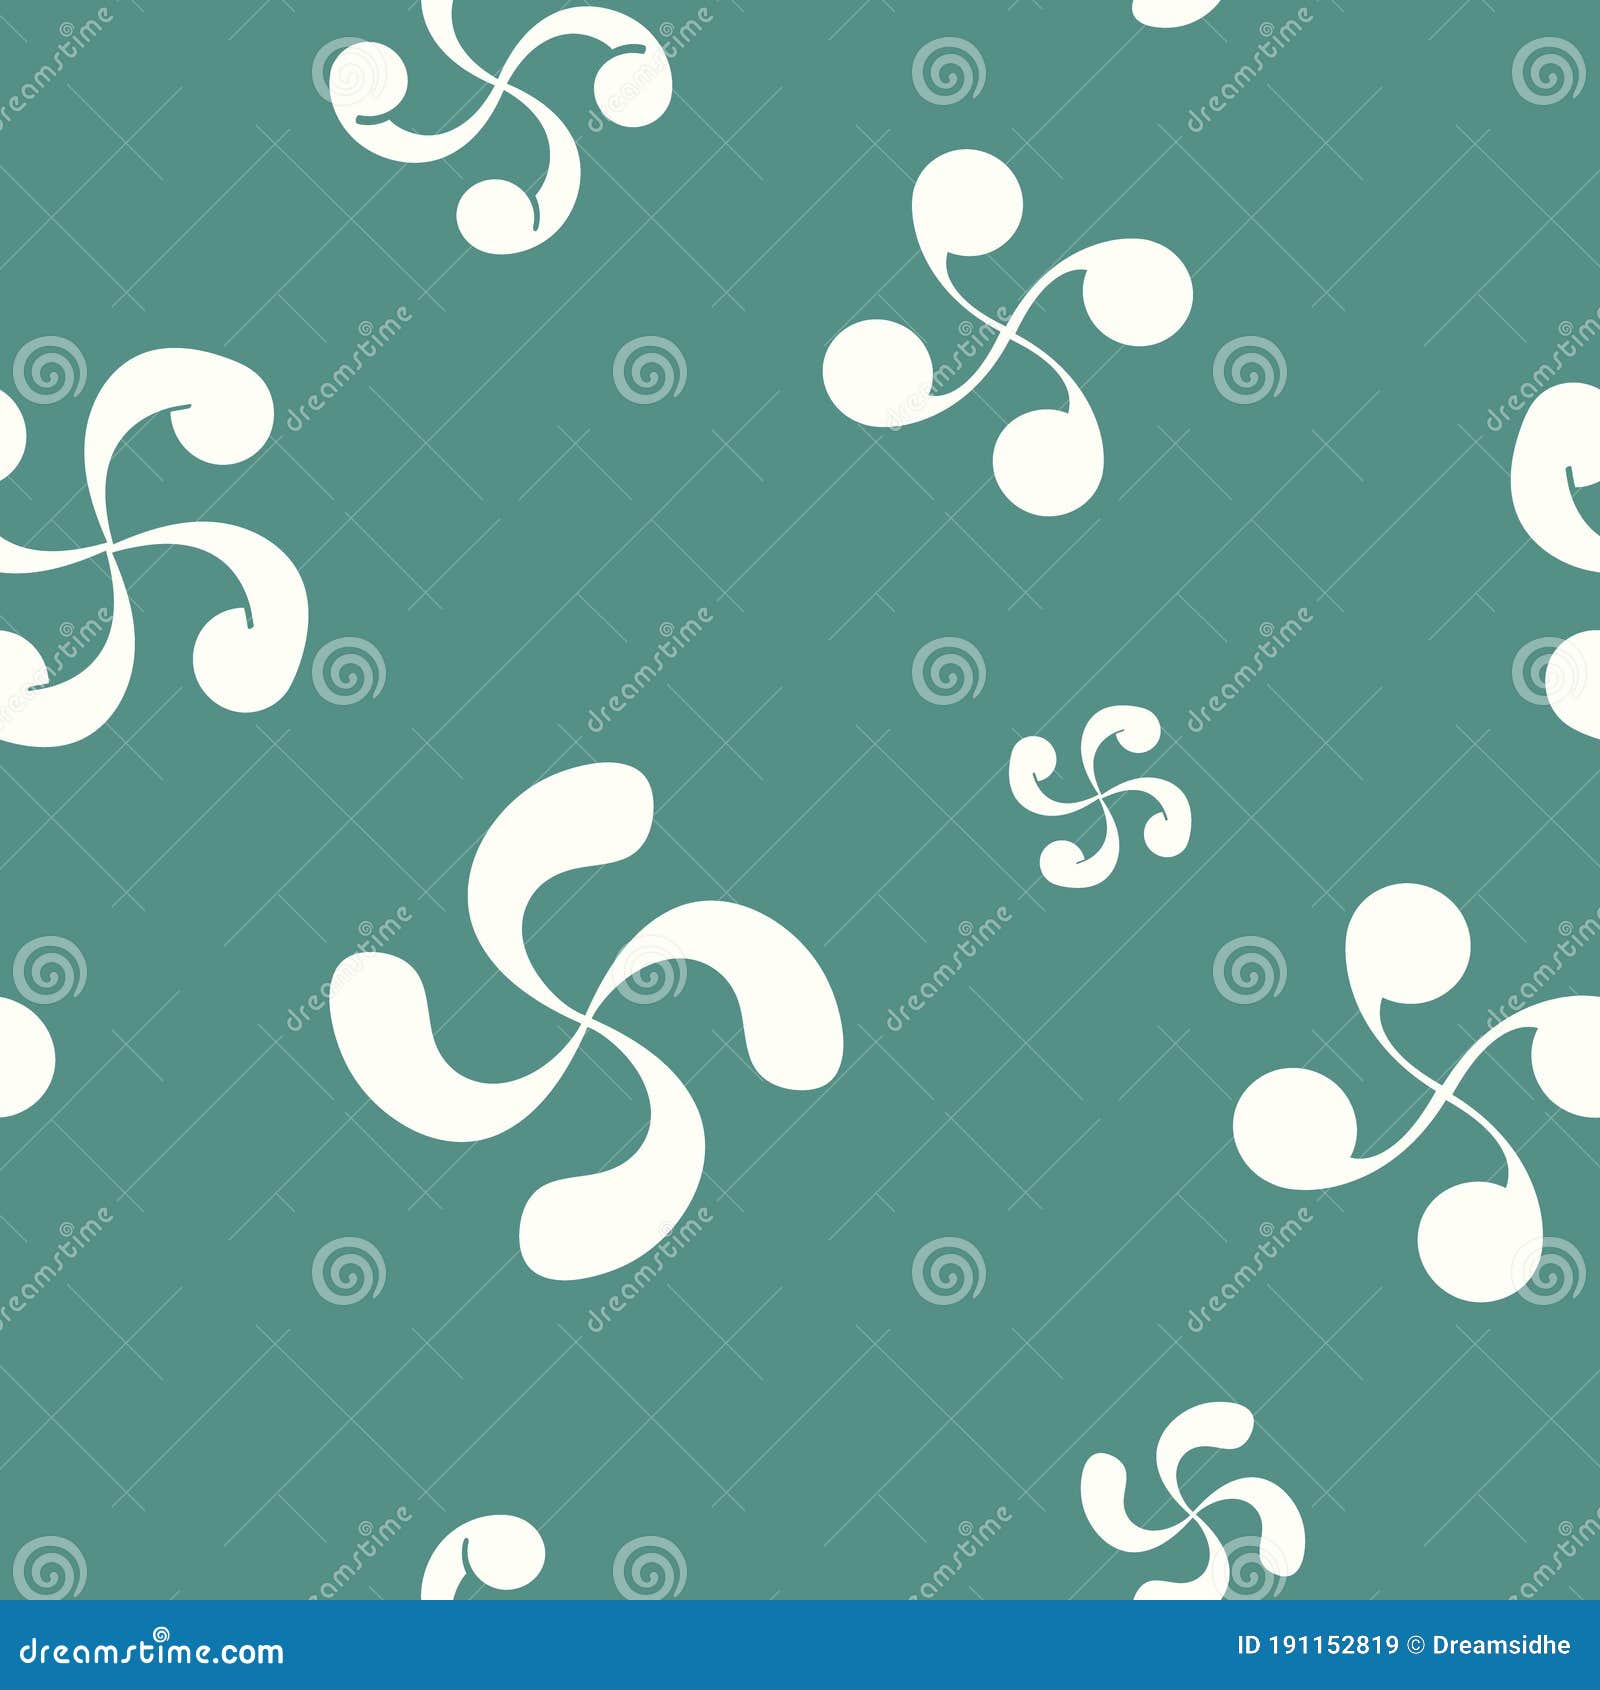 seamless pattern with basque cross lauburu